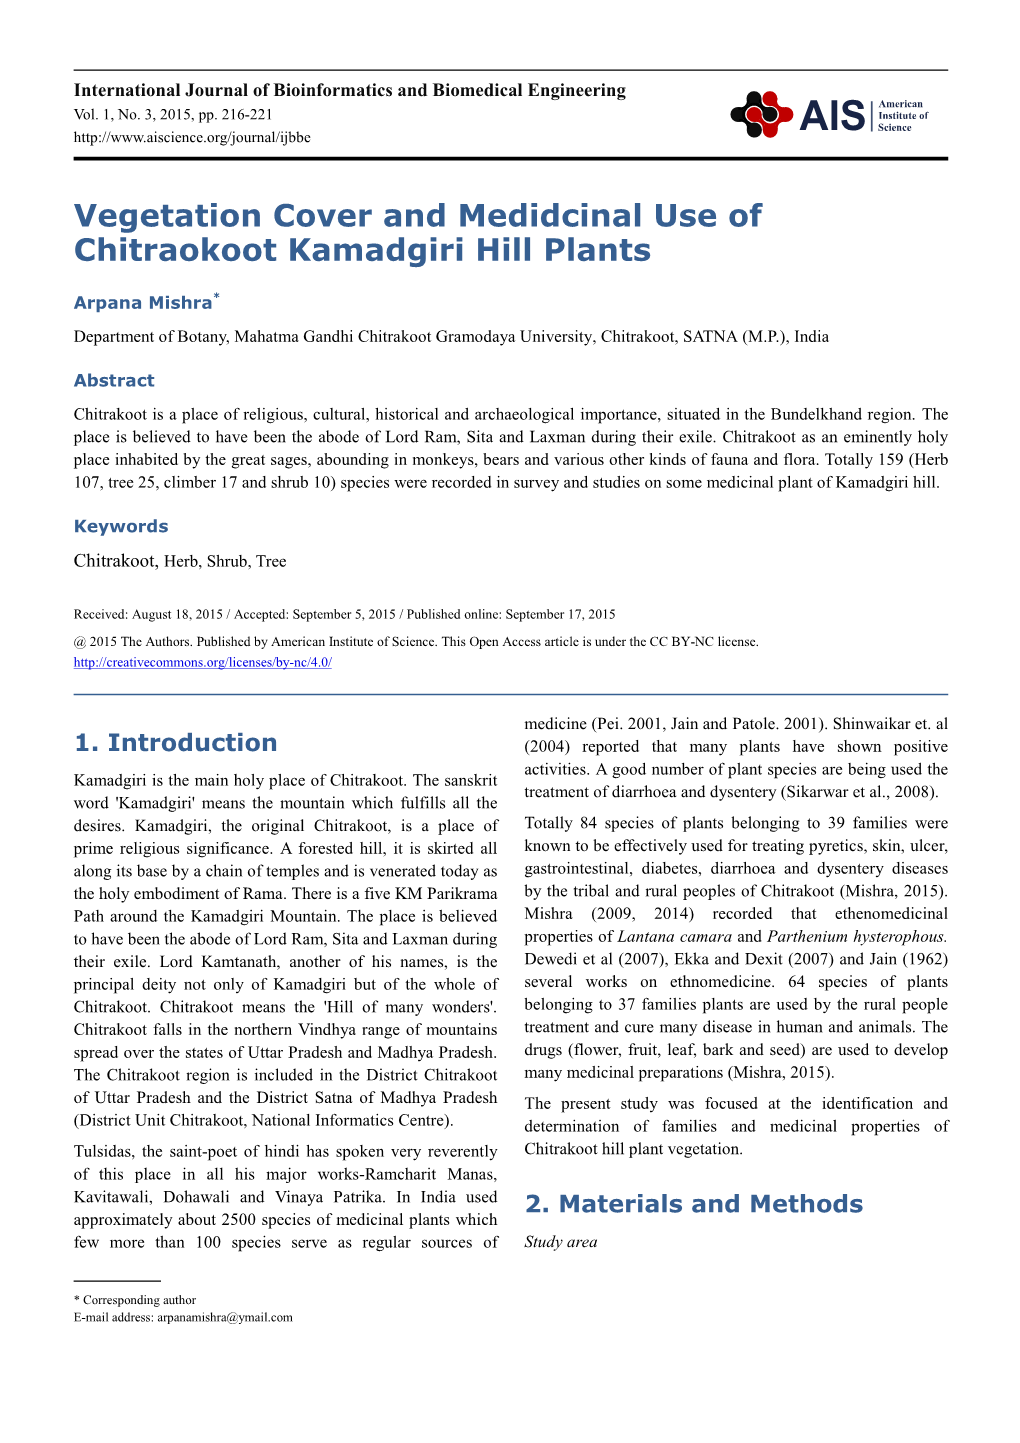 Vegetation Cover and Medidcinal Use of Chitraokoot Kamadgiri Hill Plants